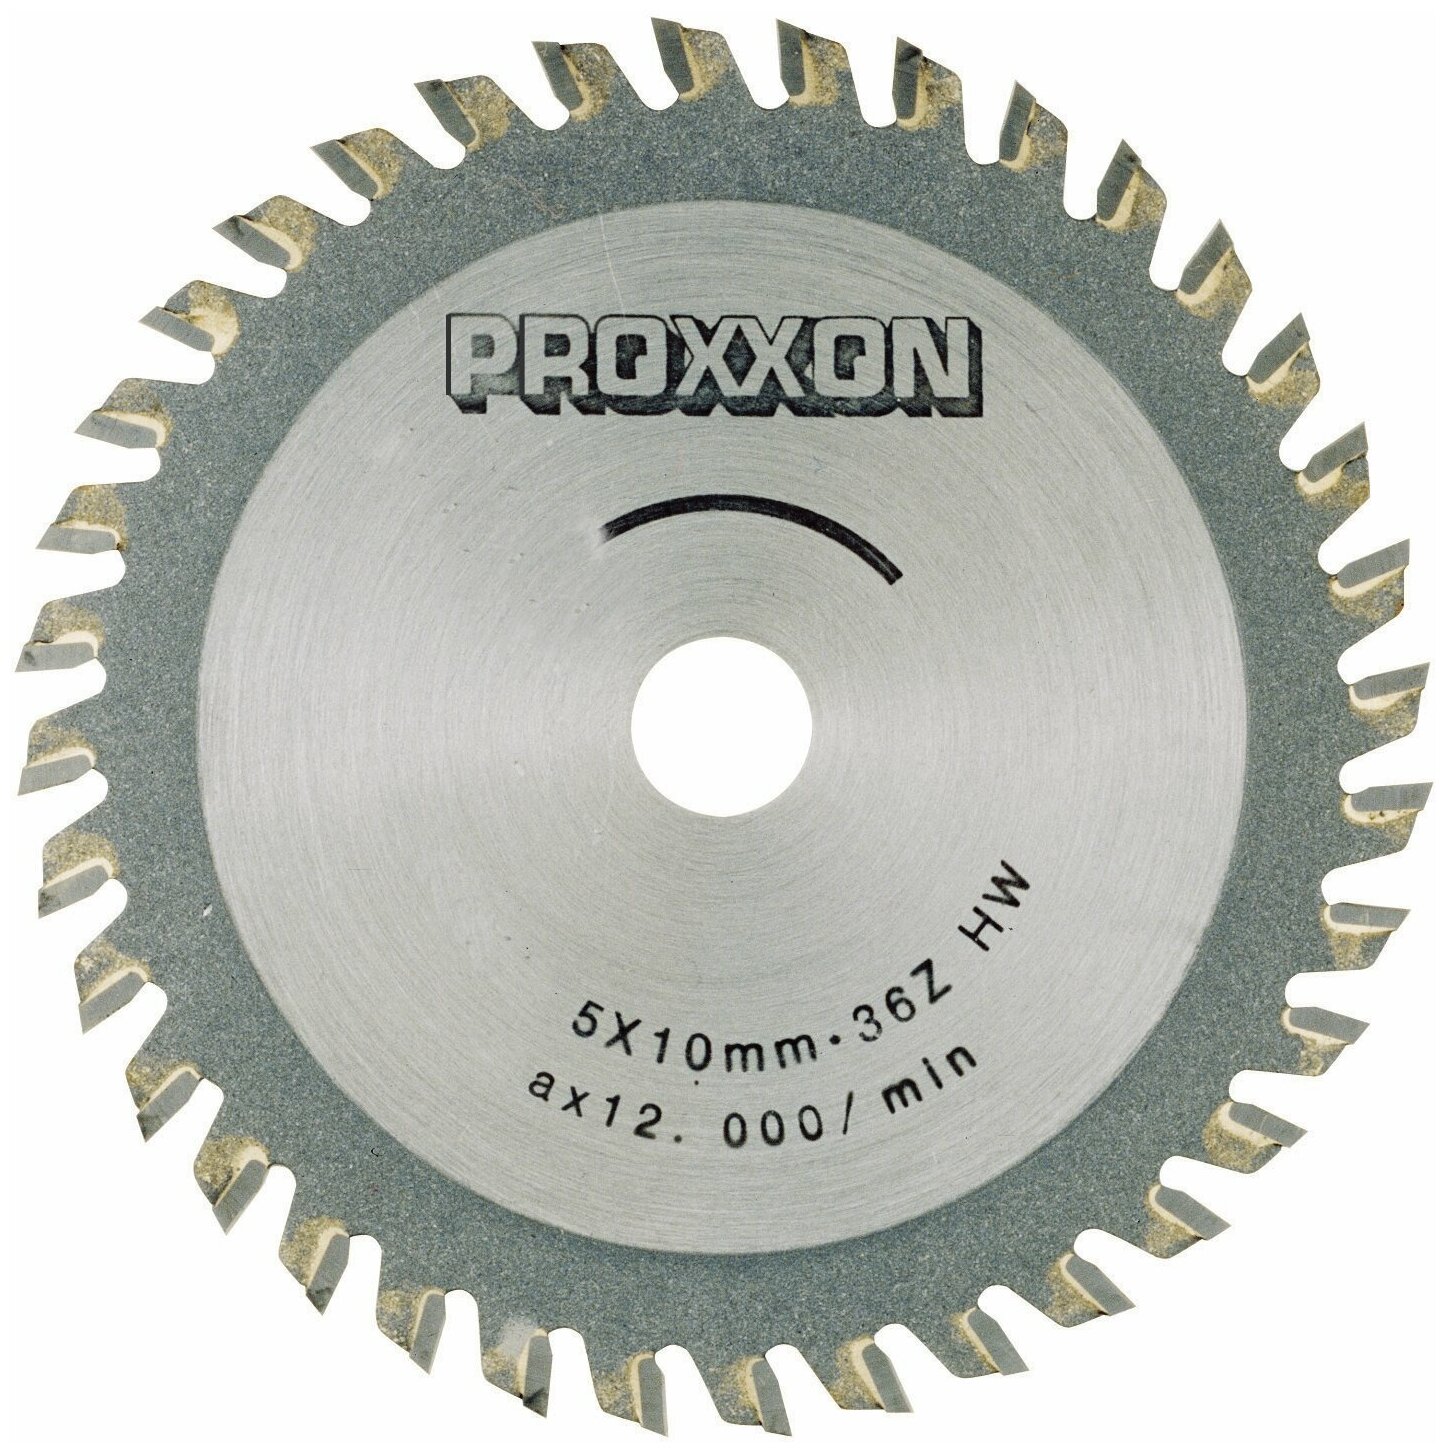  Proxxon 80        Proxxon, 28732